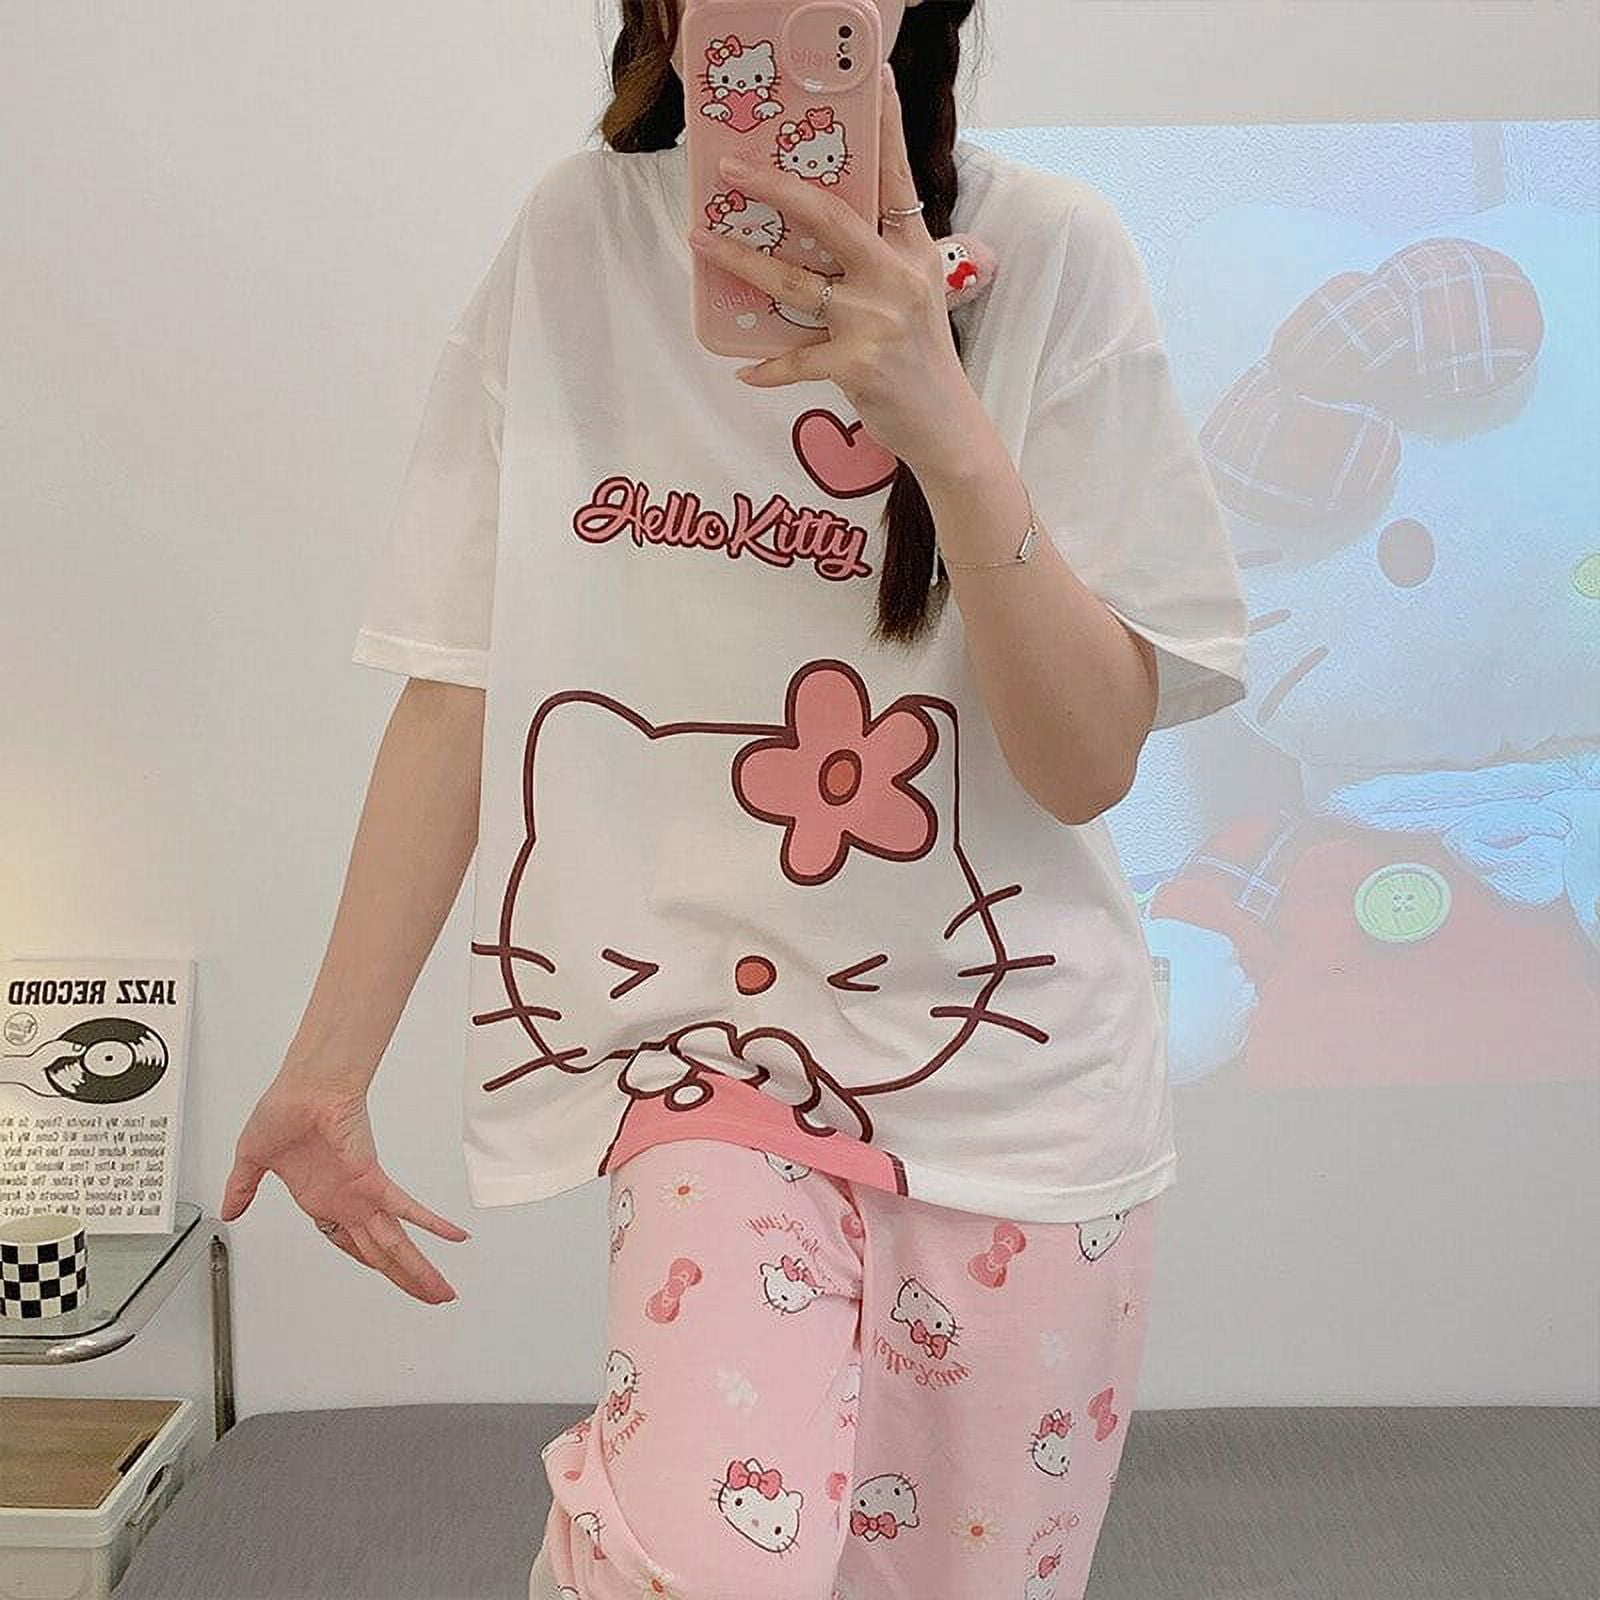 Hello Kitty Pajamas Kawaii Pyjama Set Female print Cute Anime Sleepwear Pjs  gift